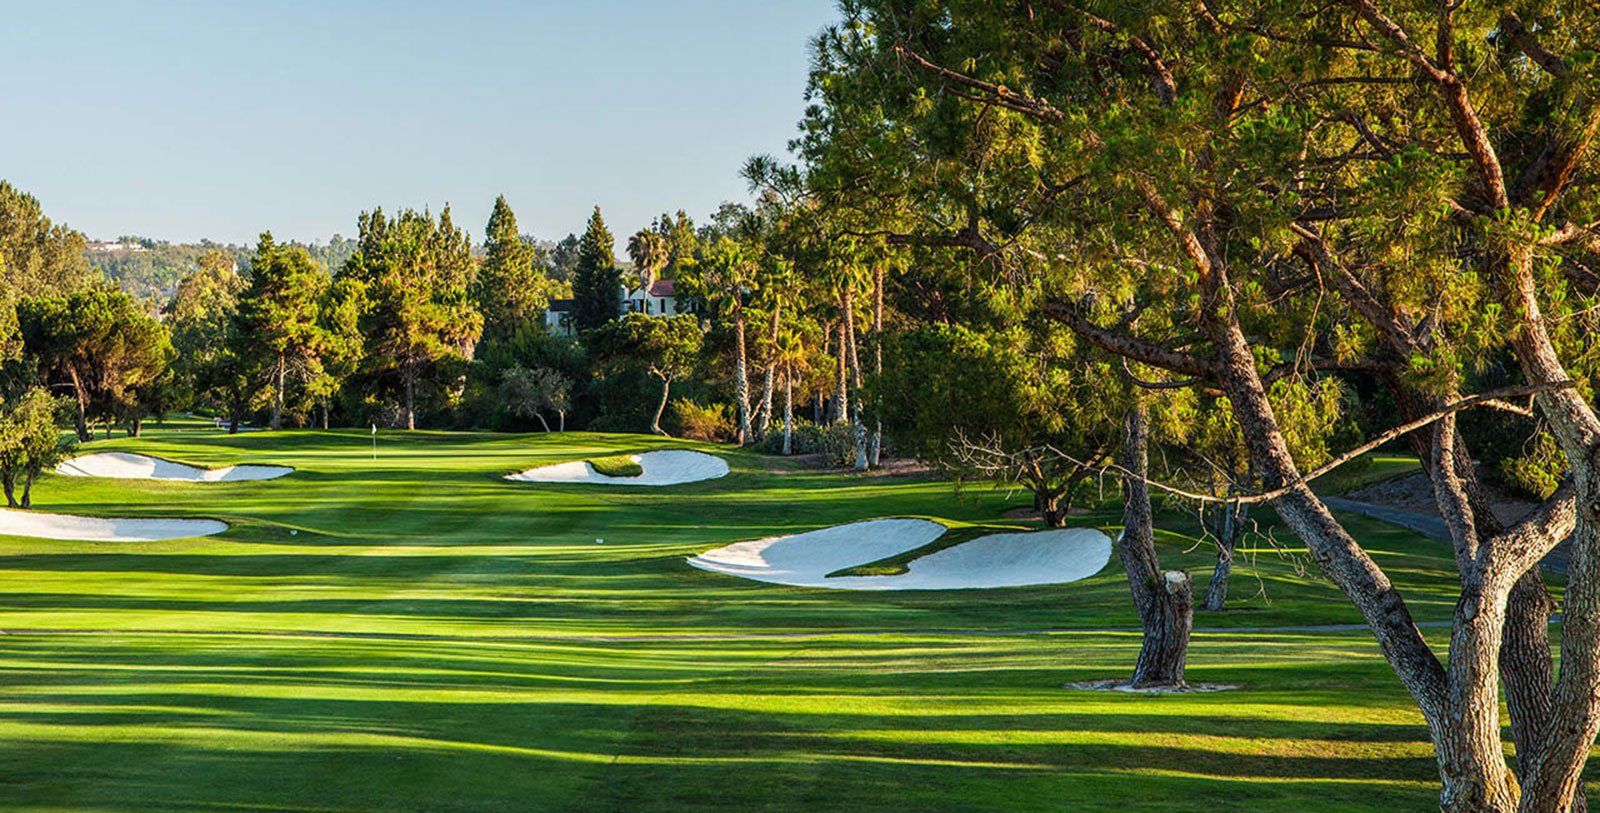 Experience a round of golf at Rancho Bernardo Inn’s 18-hole championship golf course.